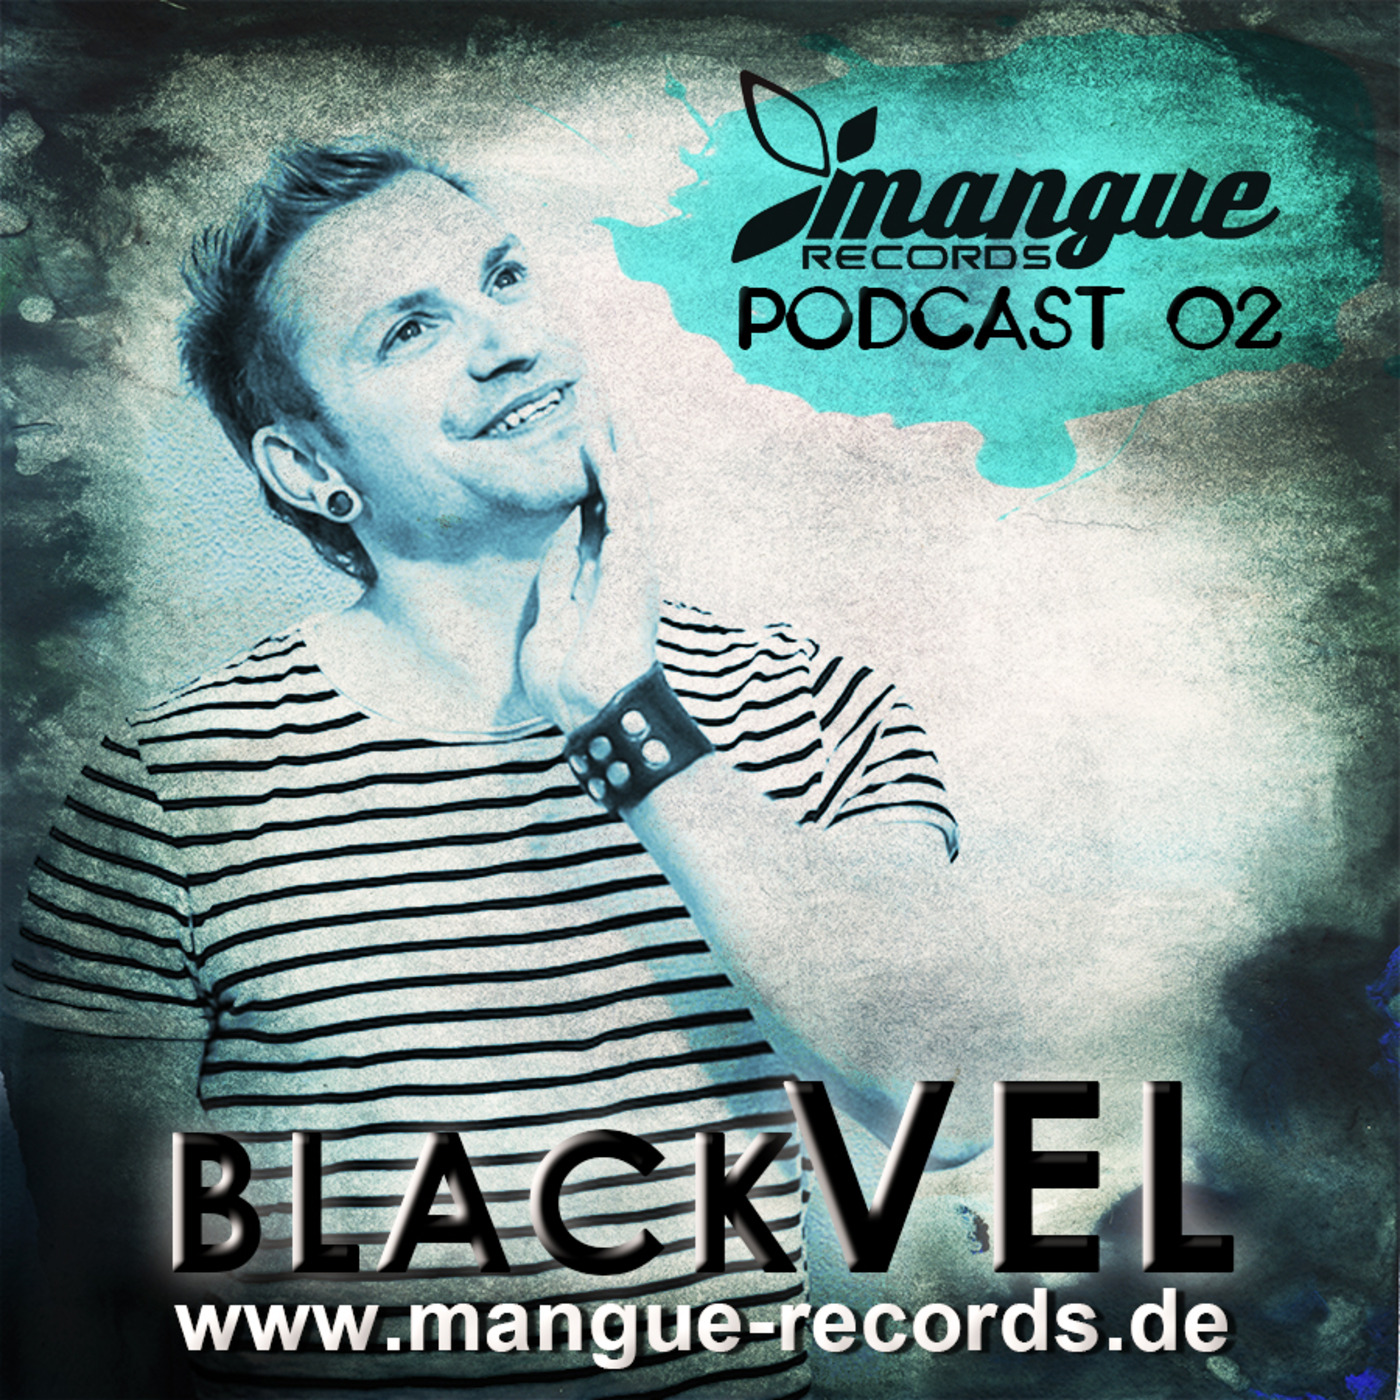 Mangue Records' Podcast